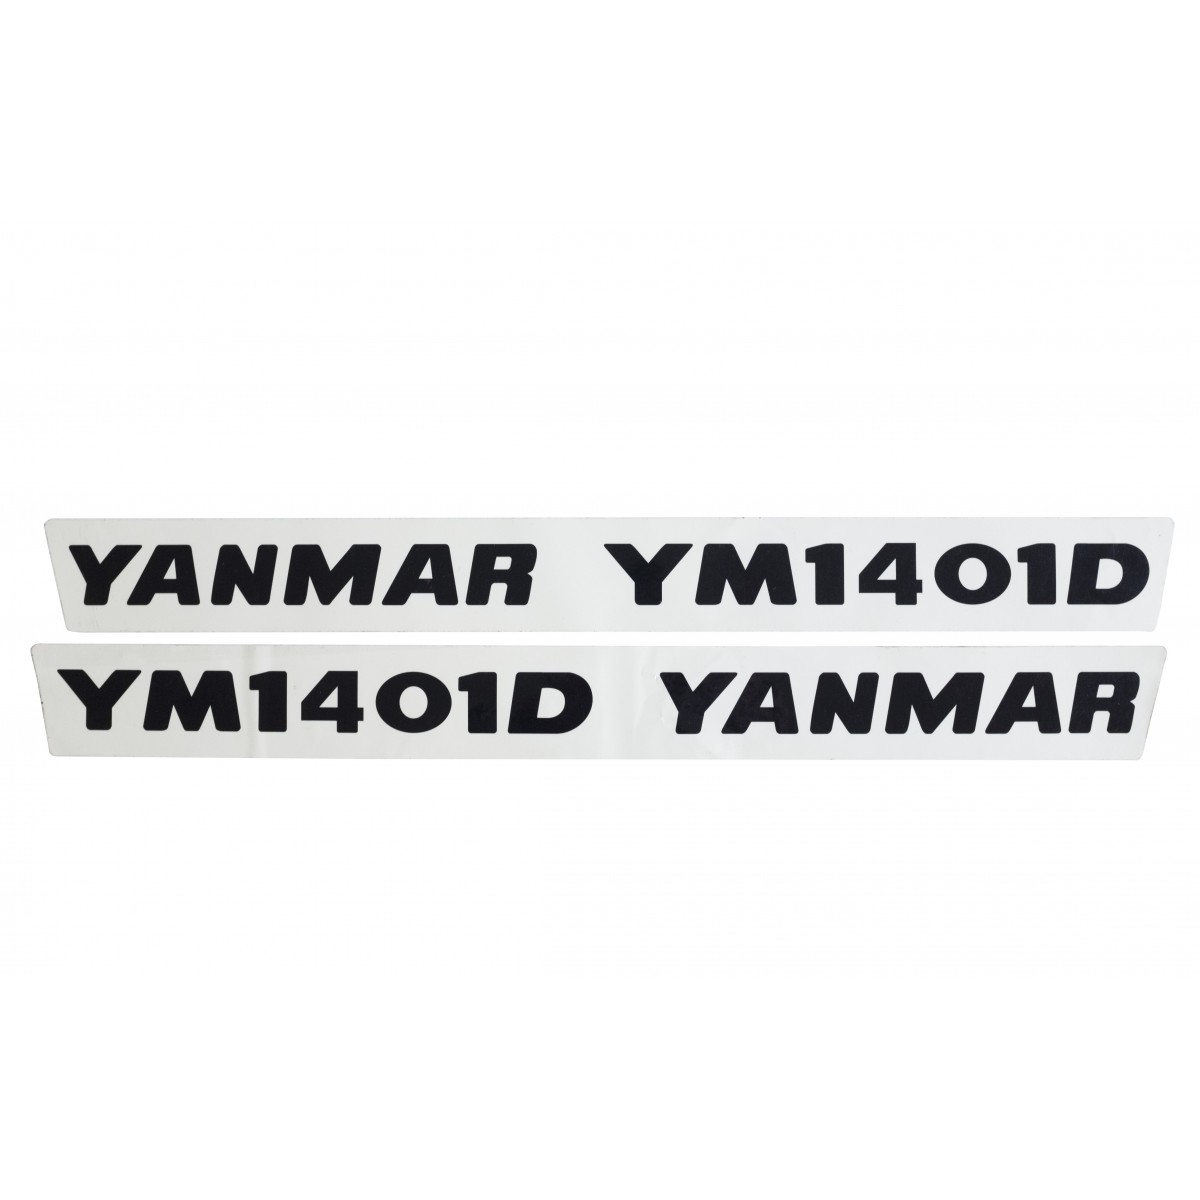 Naklejki ( 2 szt ) Yanmar YM1401D